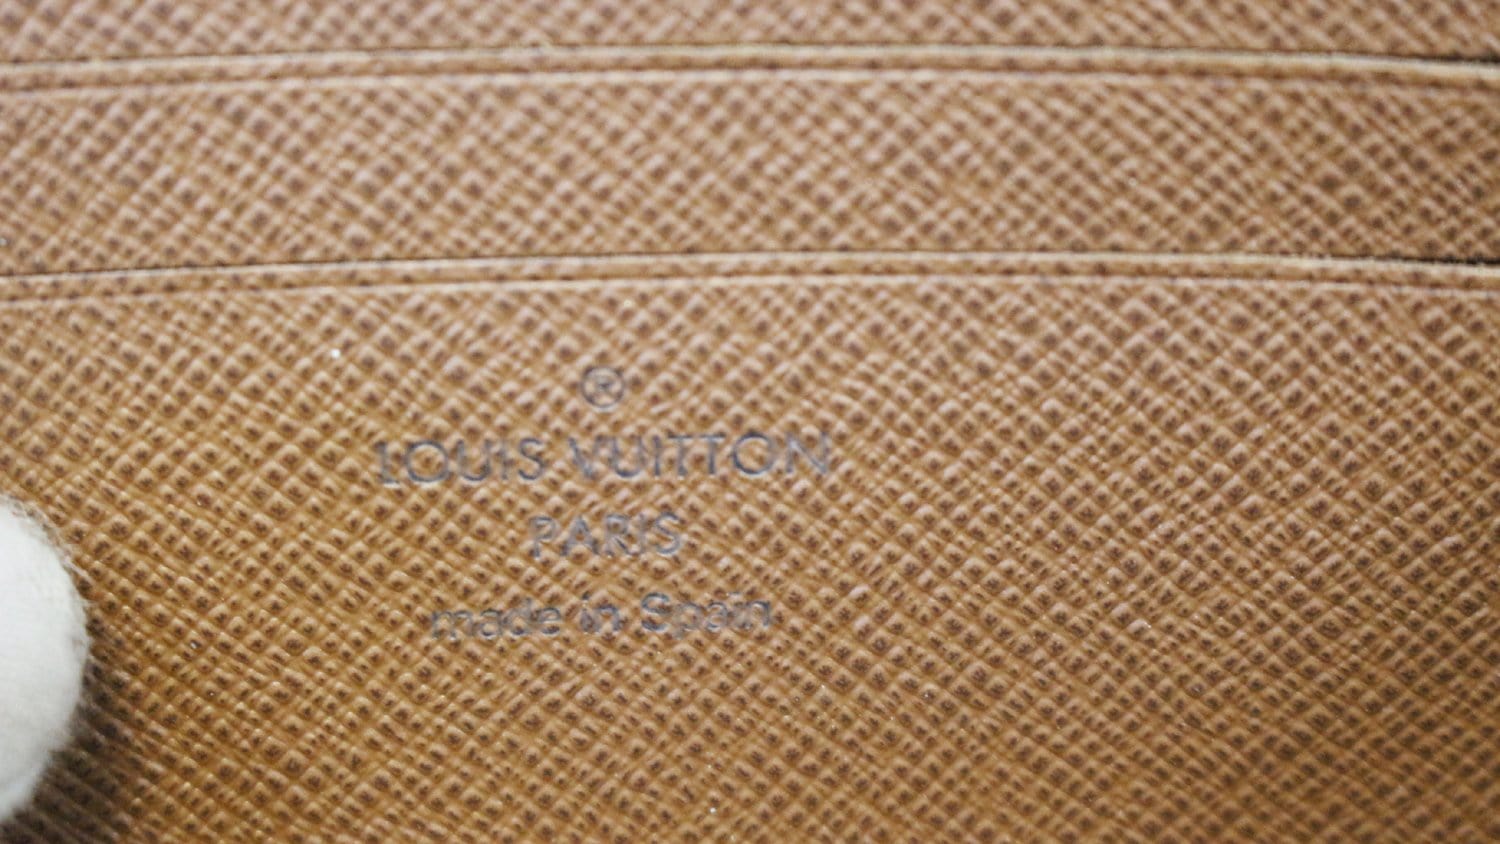 Louis Vuitton Zippy Compact Wallet NM Monogram Canvas Brown 2286412